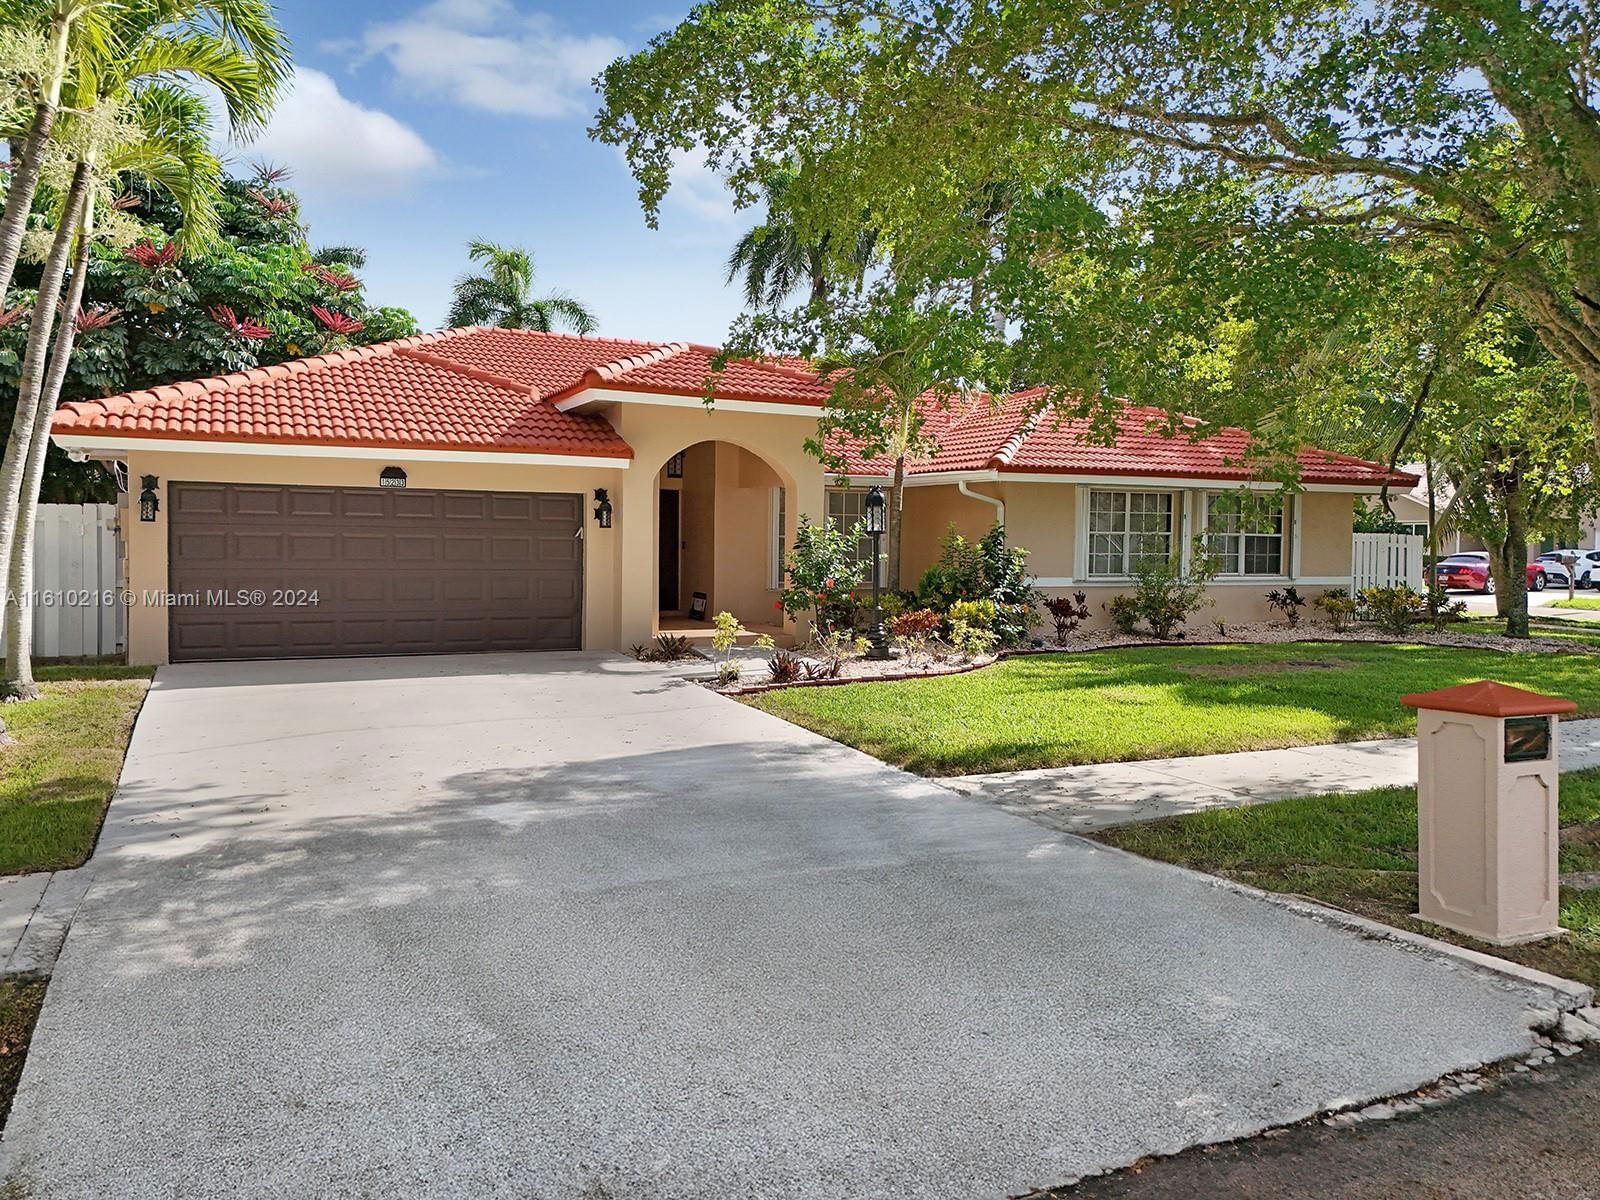 Real estate property located at 15233 112 terrace, Miami-Dade County, HAMMOCKS SHORES 2ND ADDN, Miami, FL